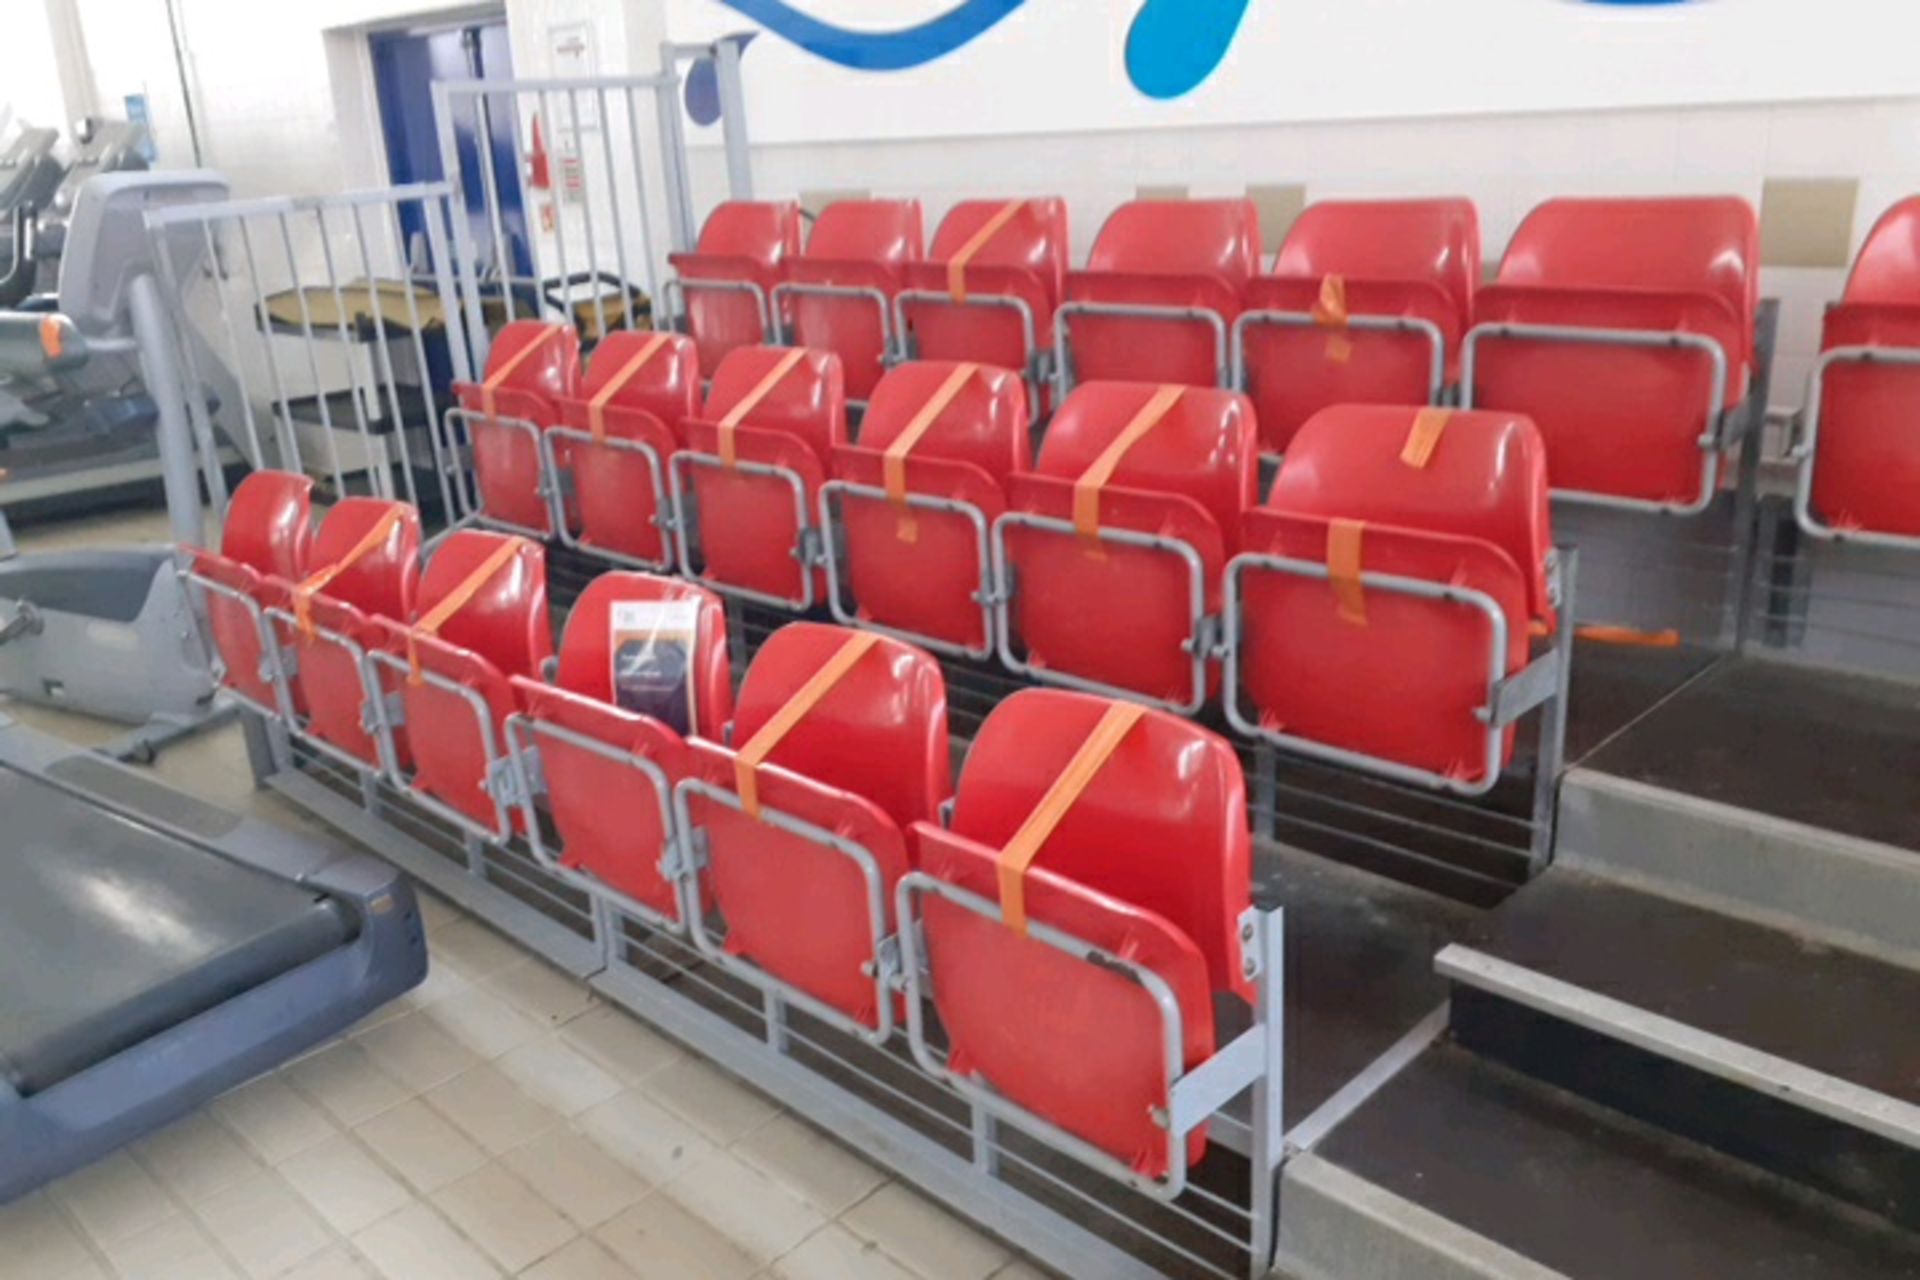 Spectator seating - Image 2 of 3